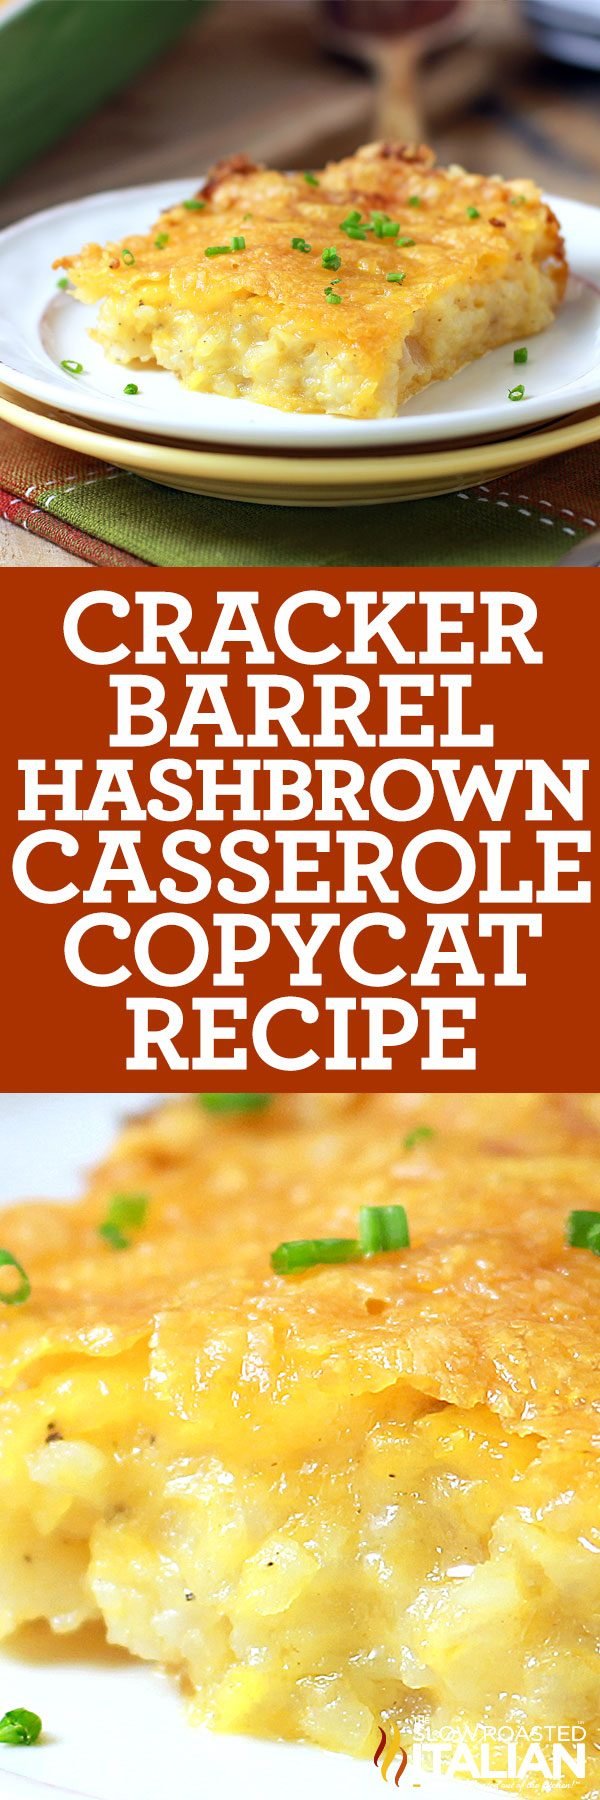 cracker barrel hashbrown casserole copycat recipe -pin